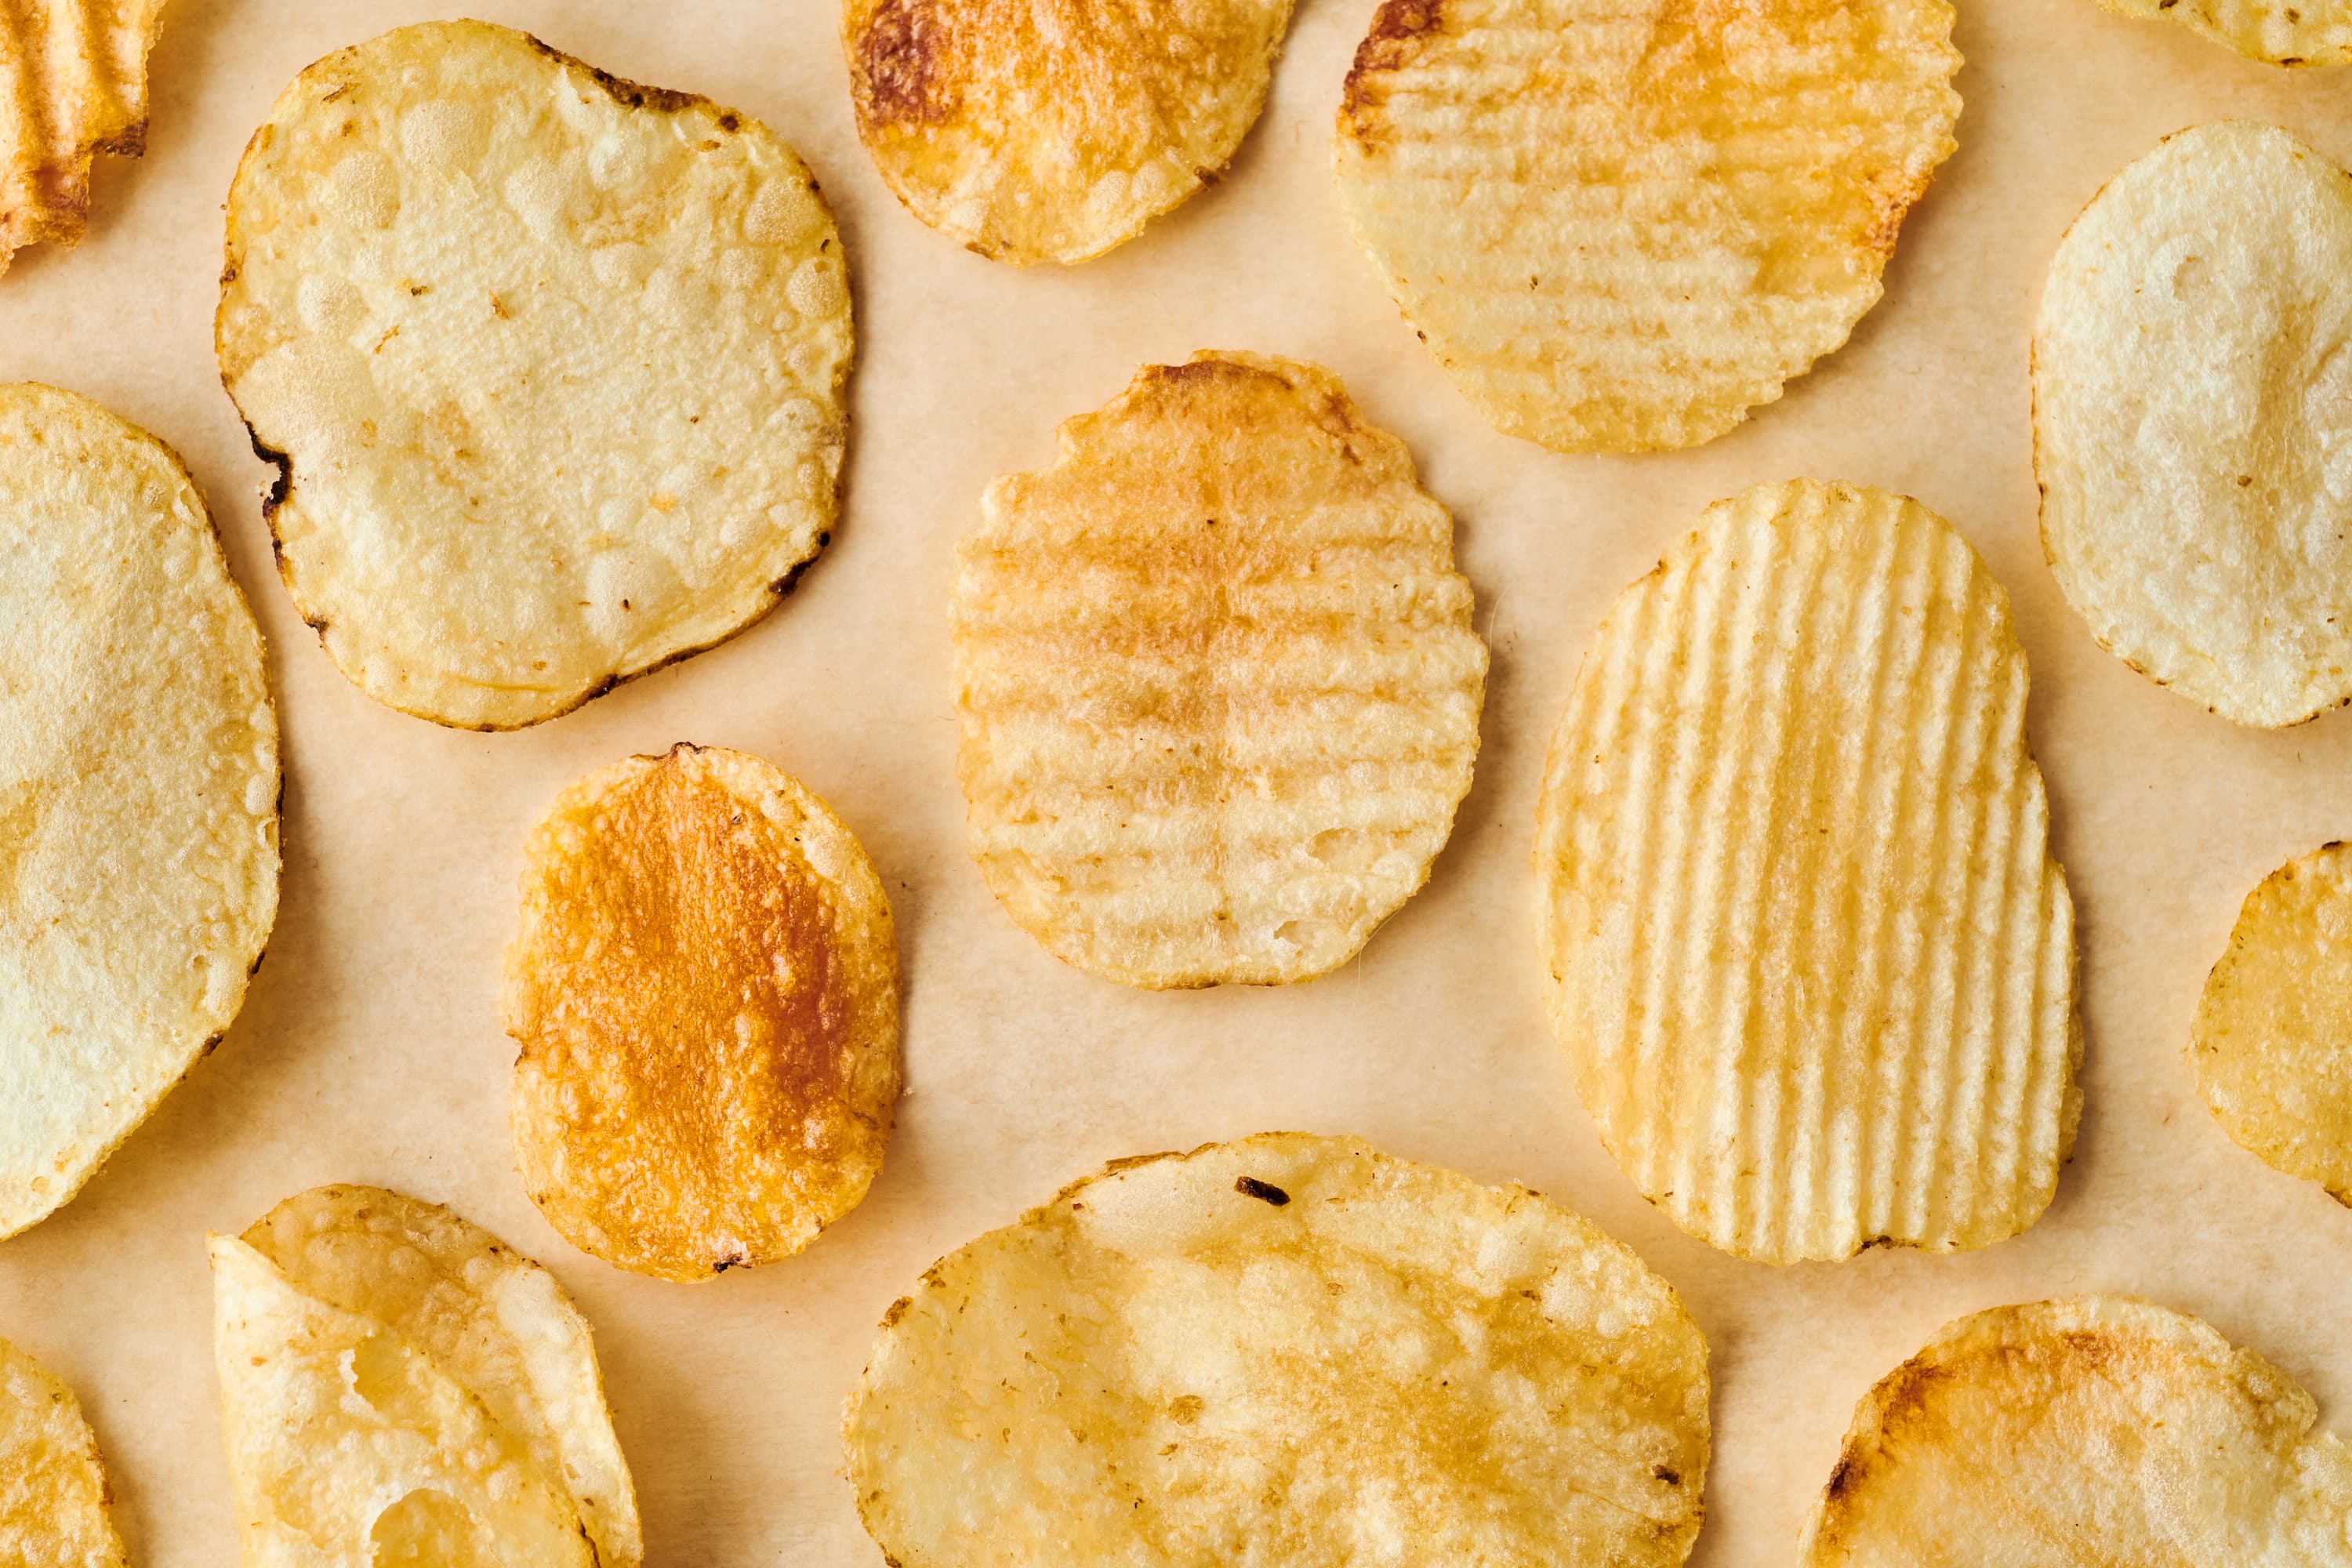  Good Health Glories Kettle Sweet Potato Chips, 5-Ounce